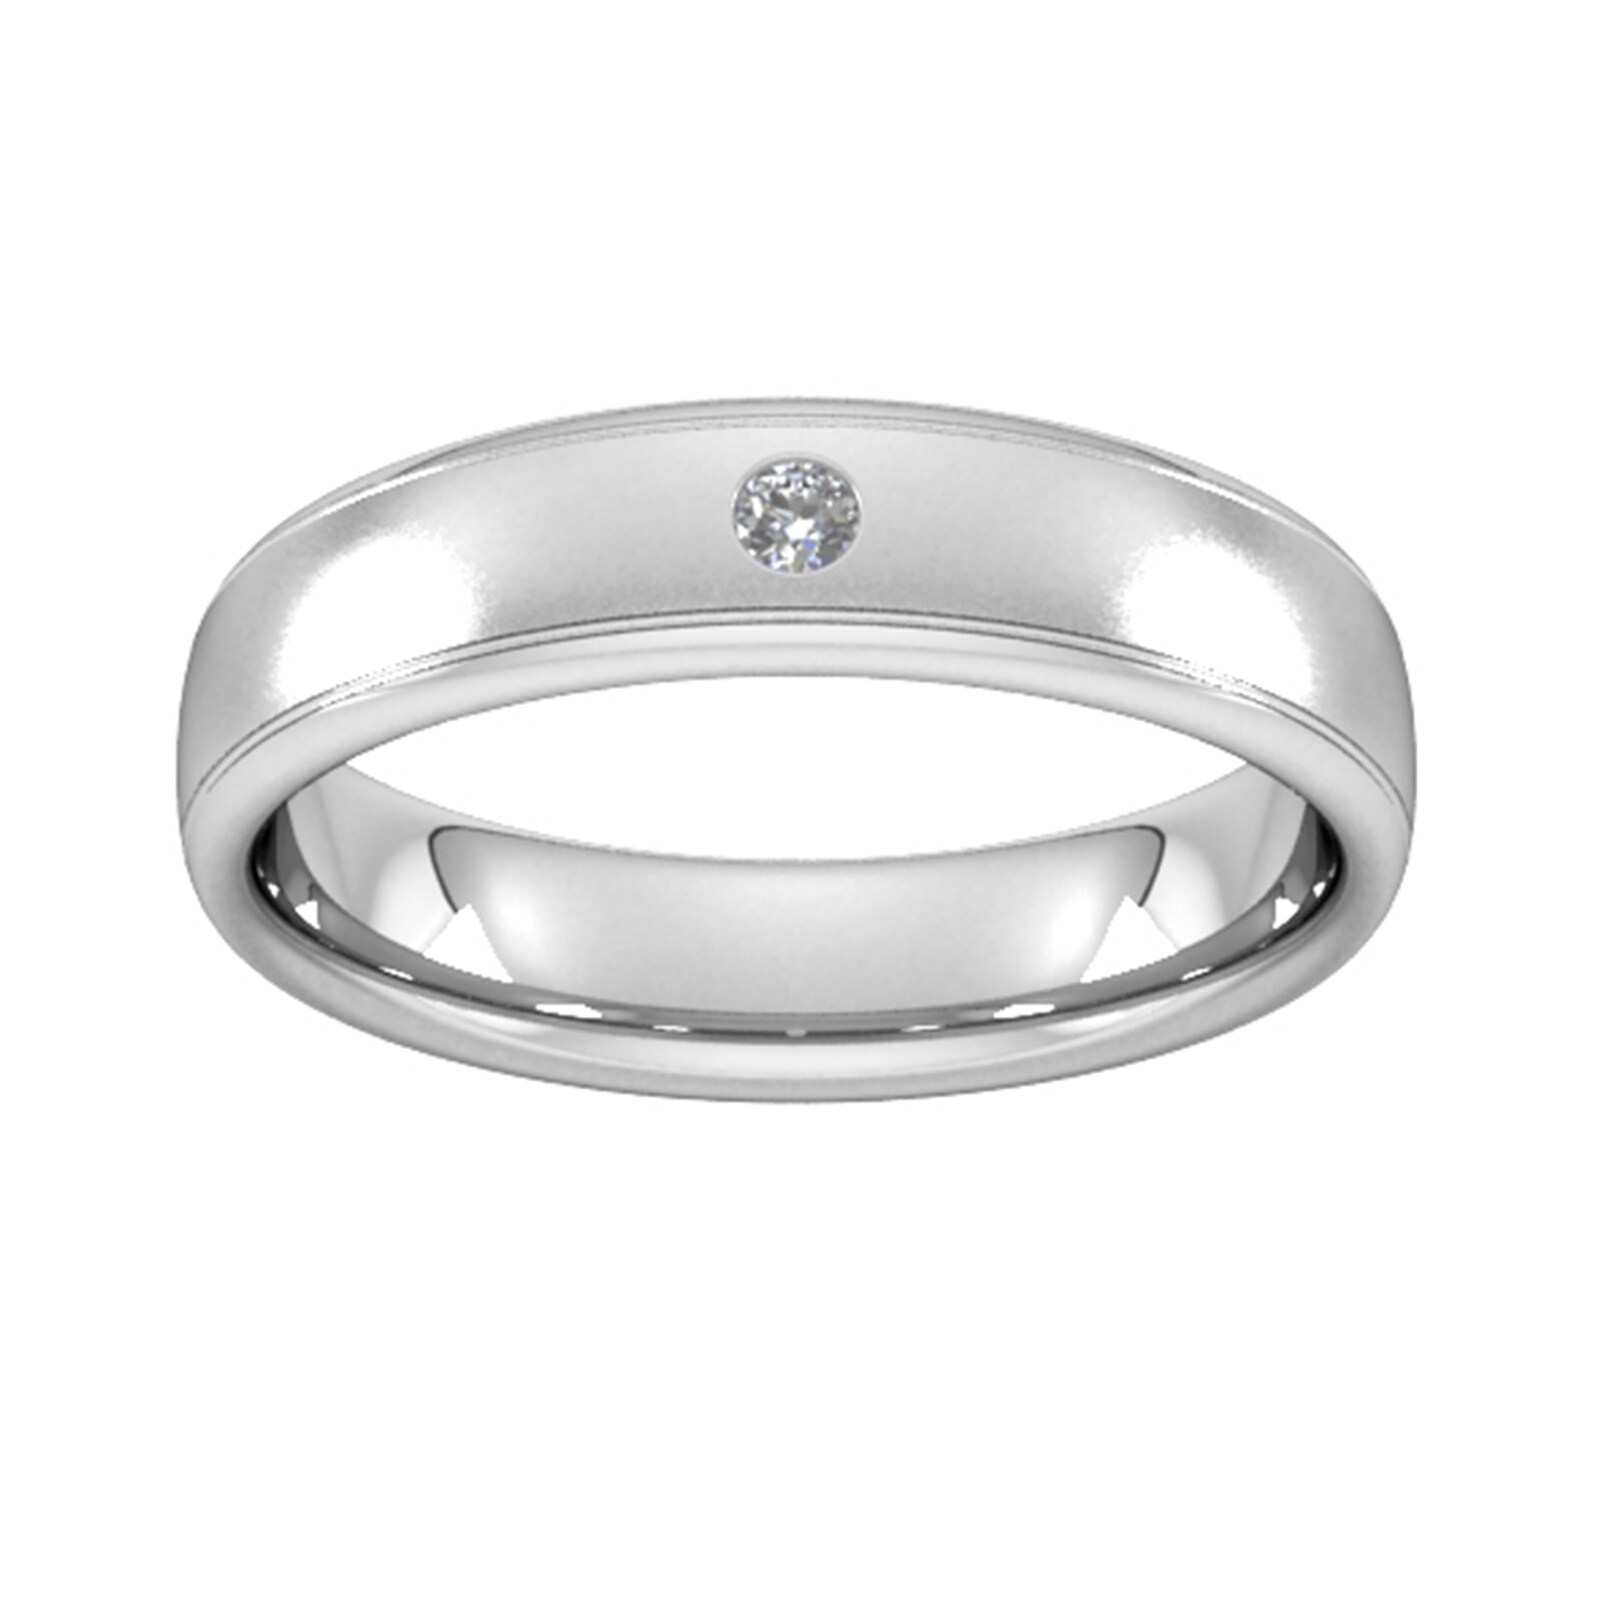 5mm Brilliant Cut Diamond Set Wedding Ring In 18 Carat White Gold - Ring Size M